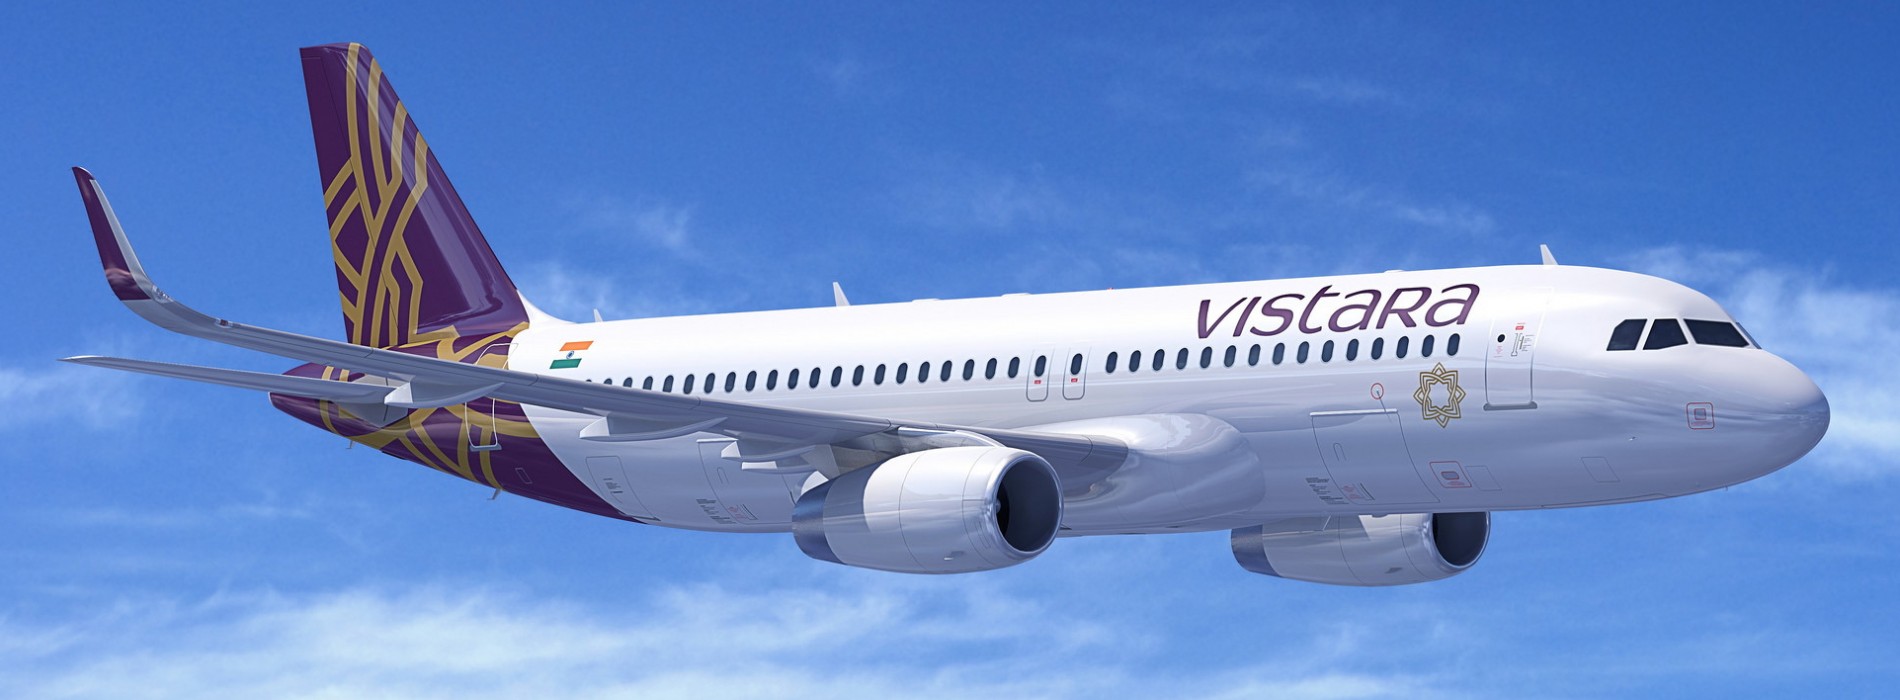 Vistara announces deals worth $3.1billion with Airbus, Boeing